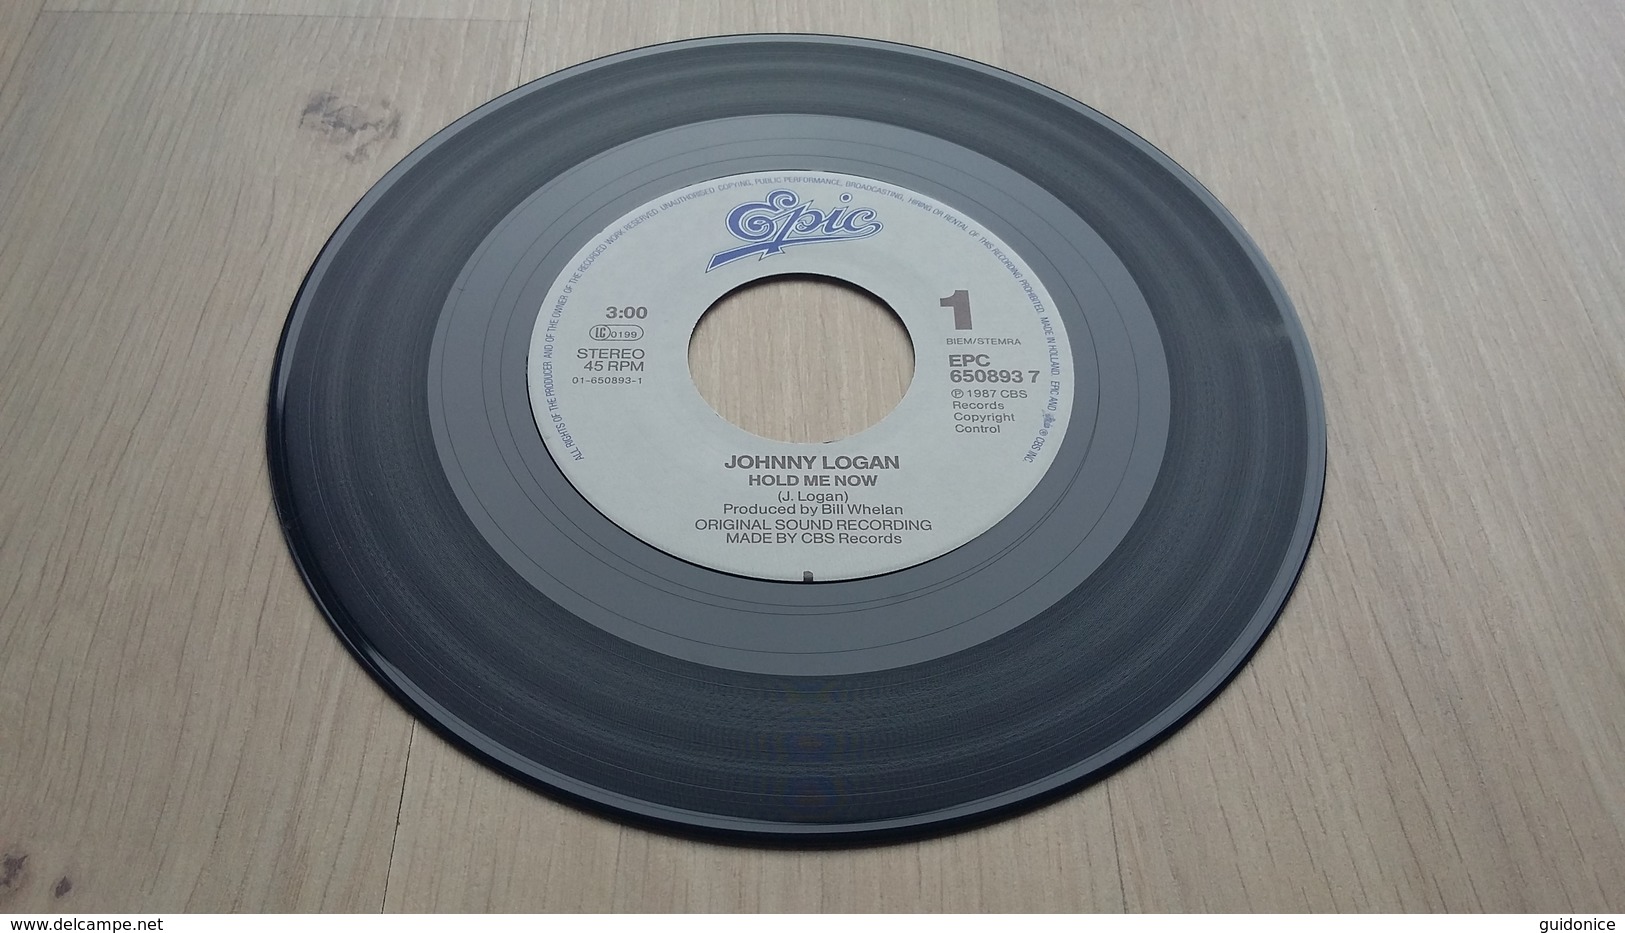 Johnny Logan - Hold Me Now - Vinyl-Single - Disco, Pop